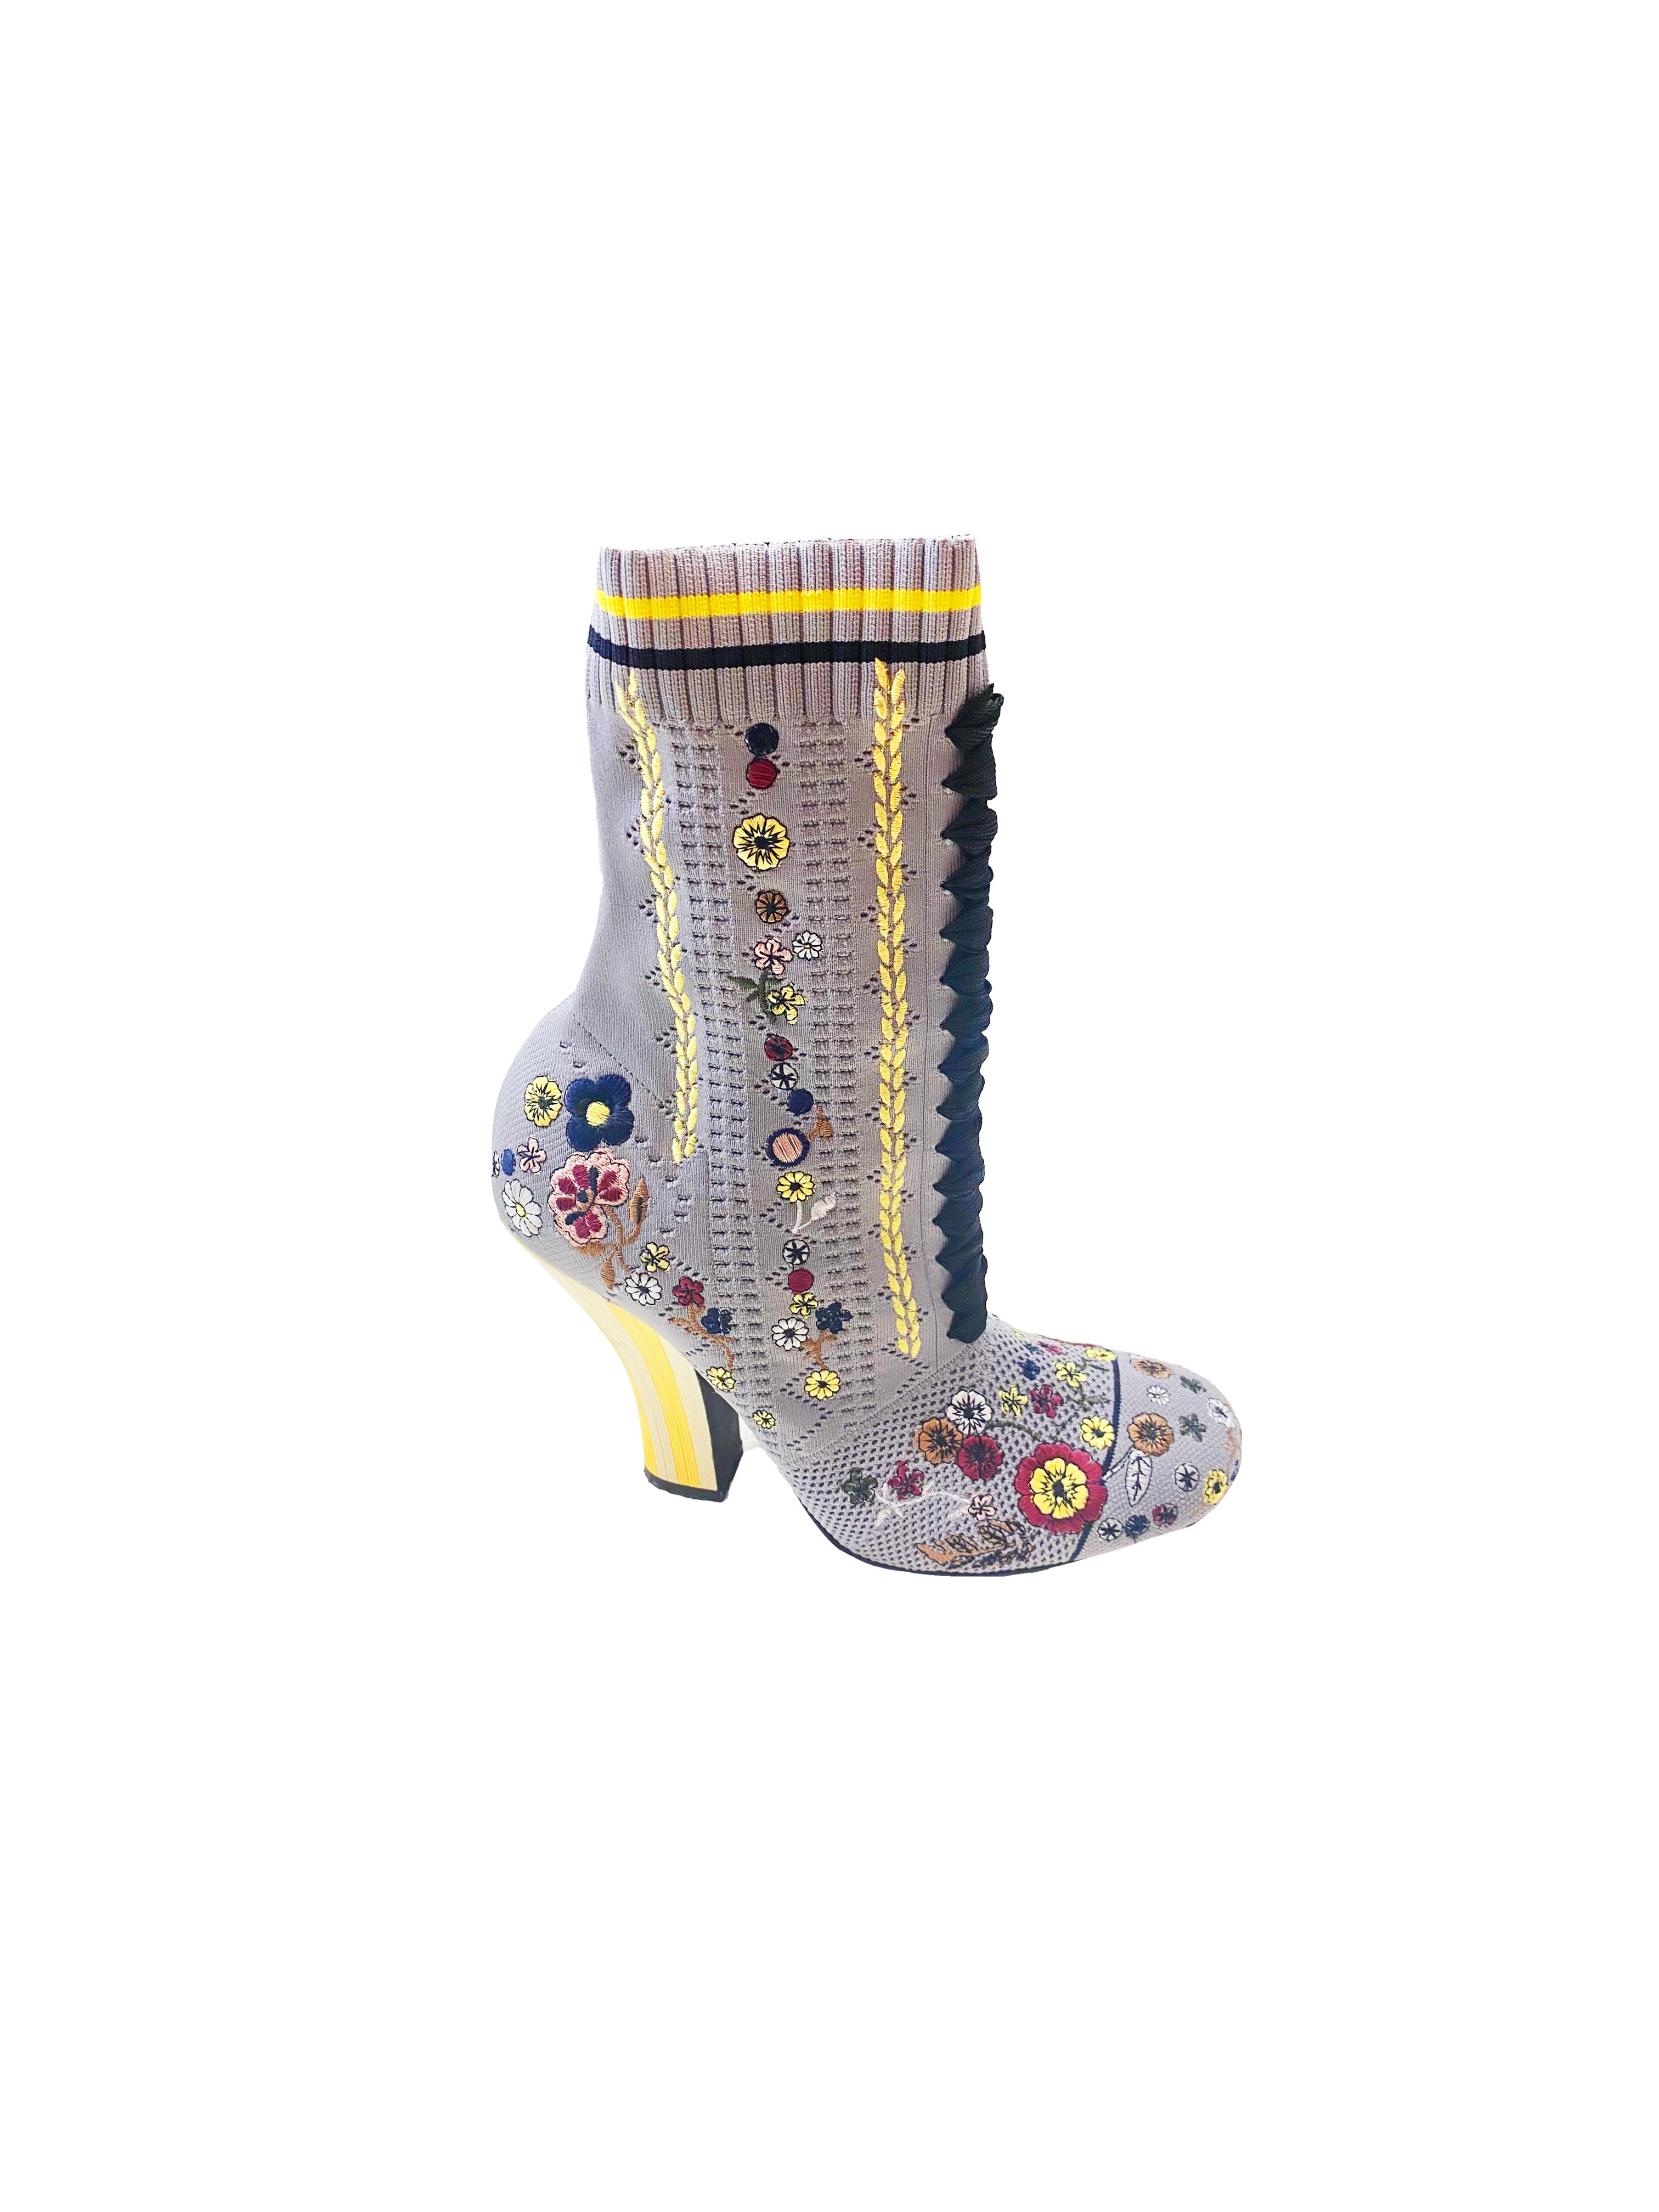 Fendi Fall 2016 Crochet Floral Sock Boots